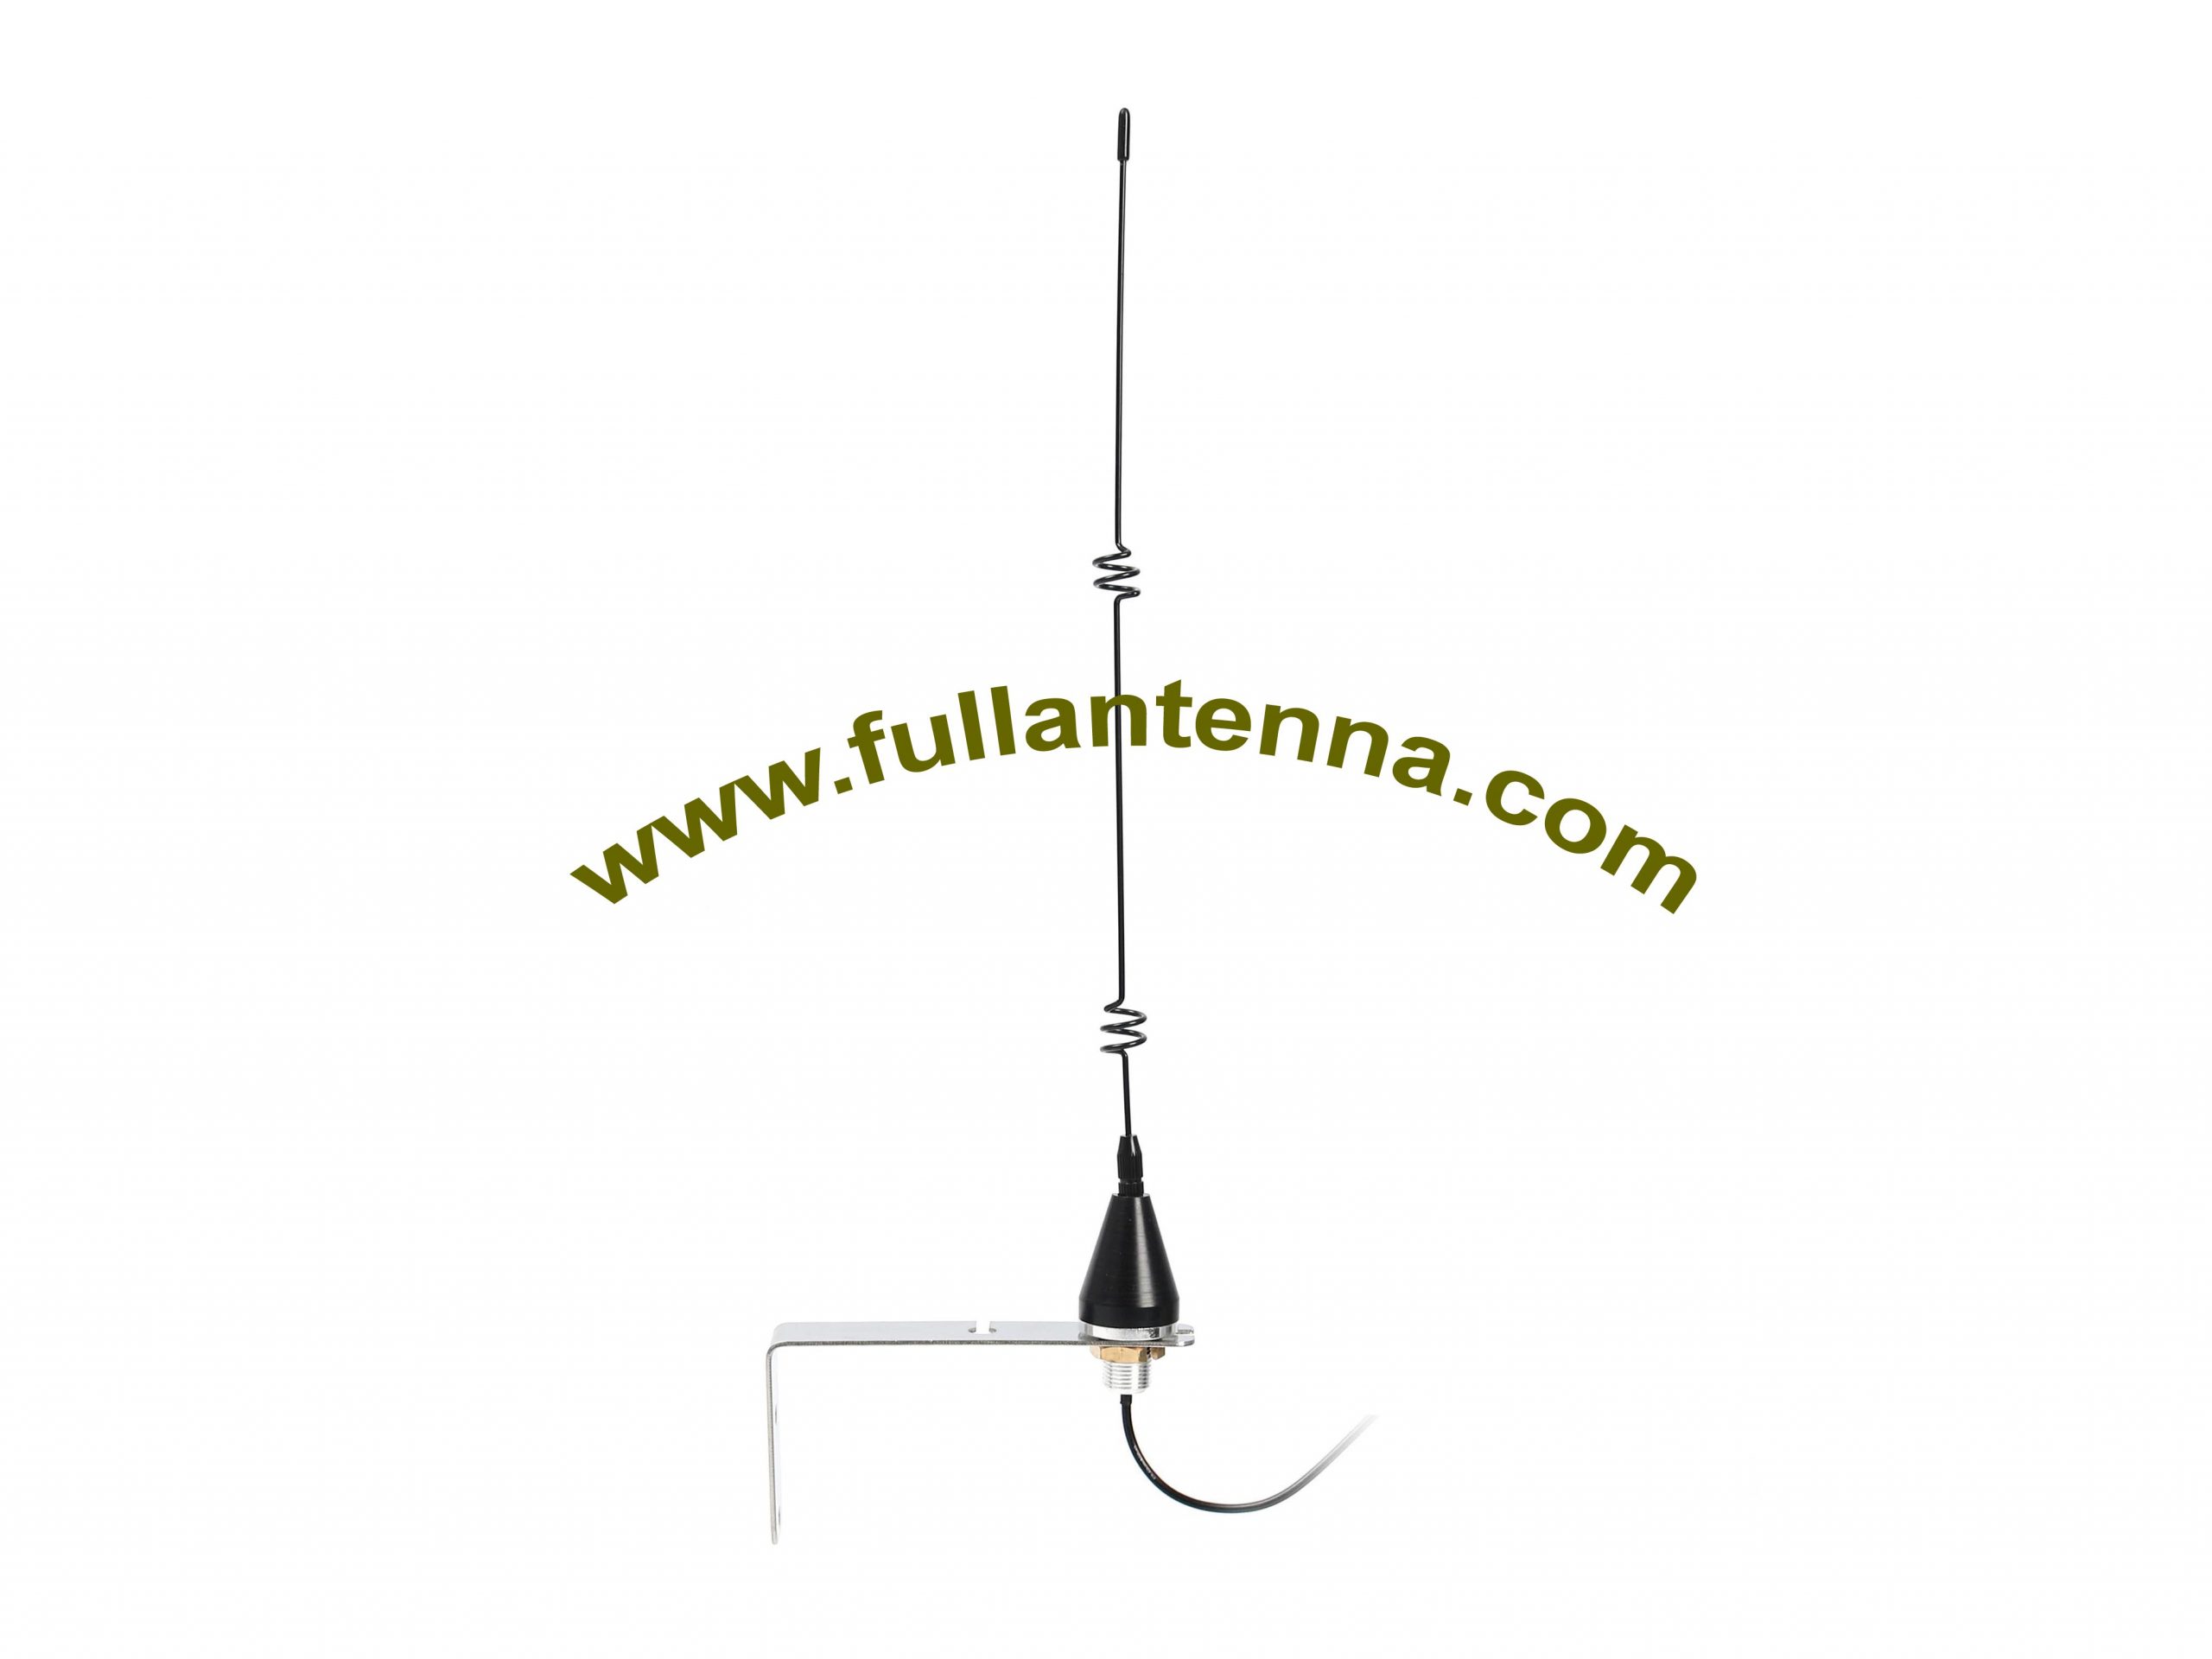 P / N: FALTE.0603L, antena externa 4G / LTE, 4G LTEantenna con soporte de pared L soporte